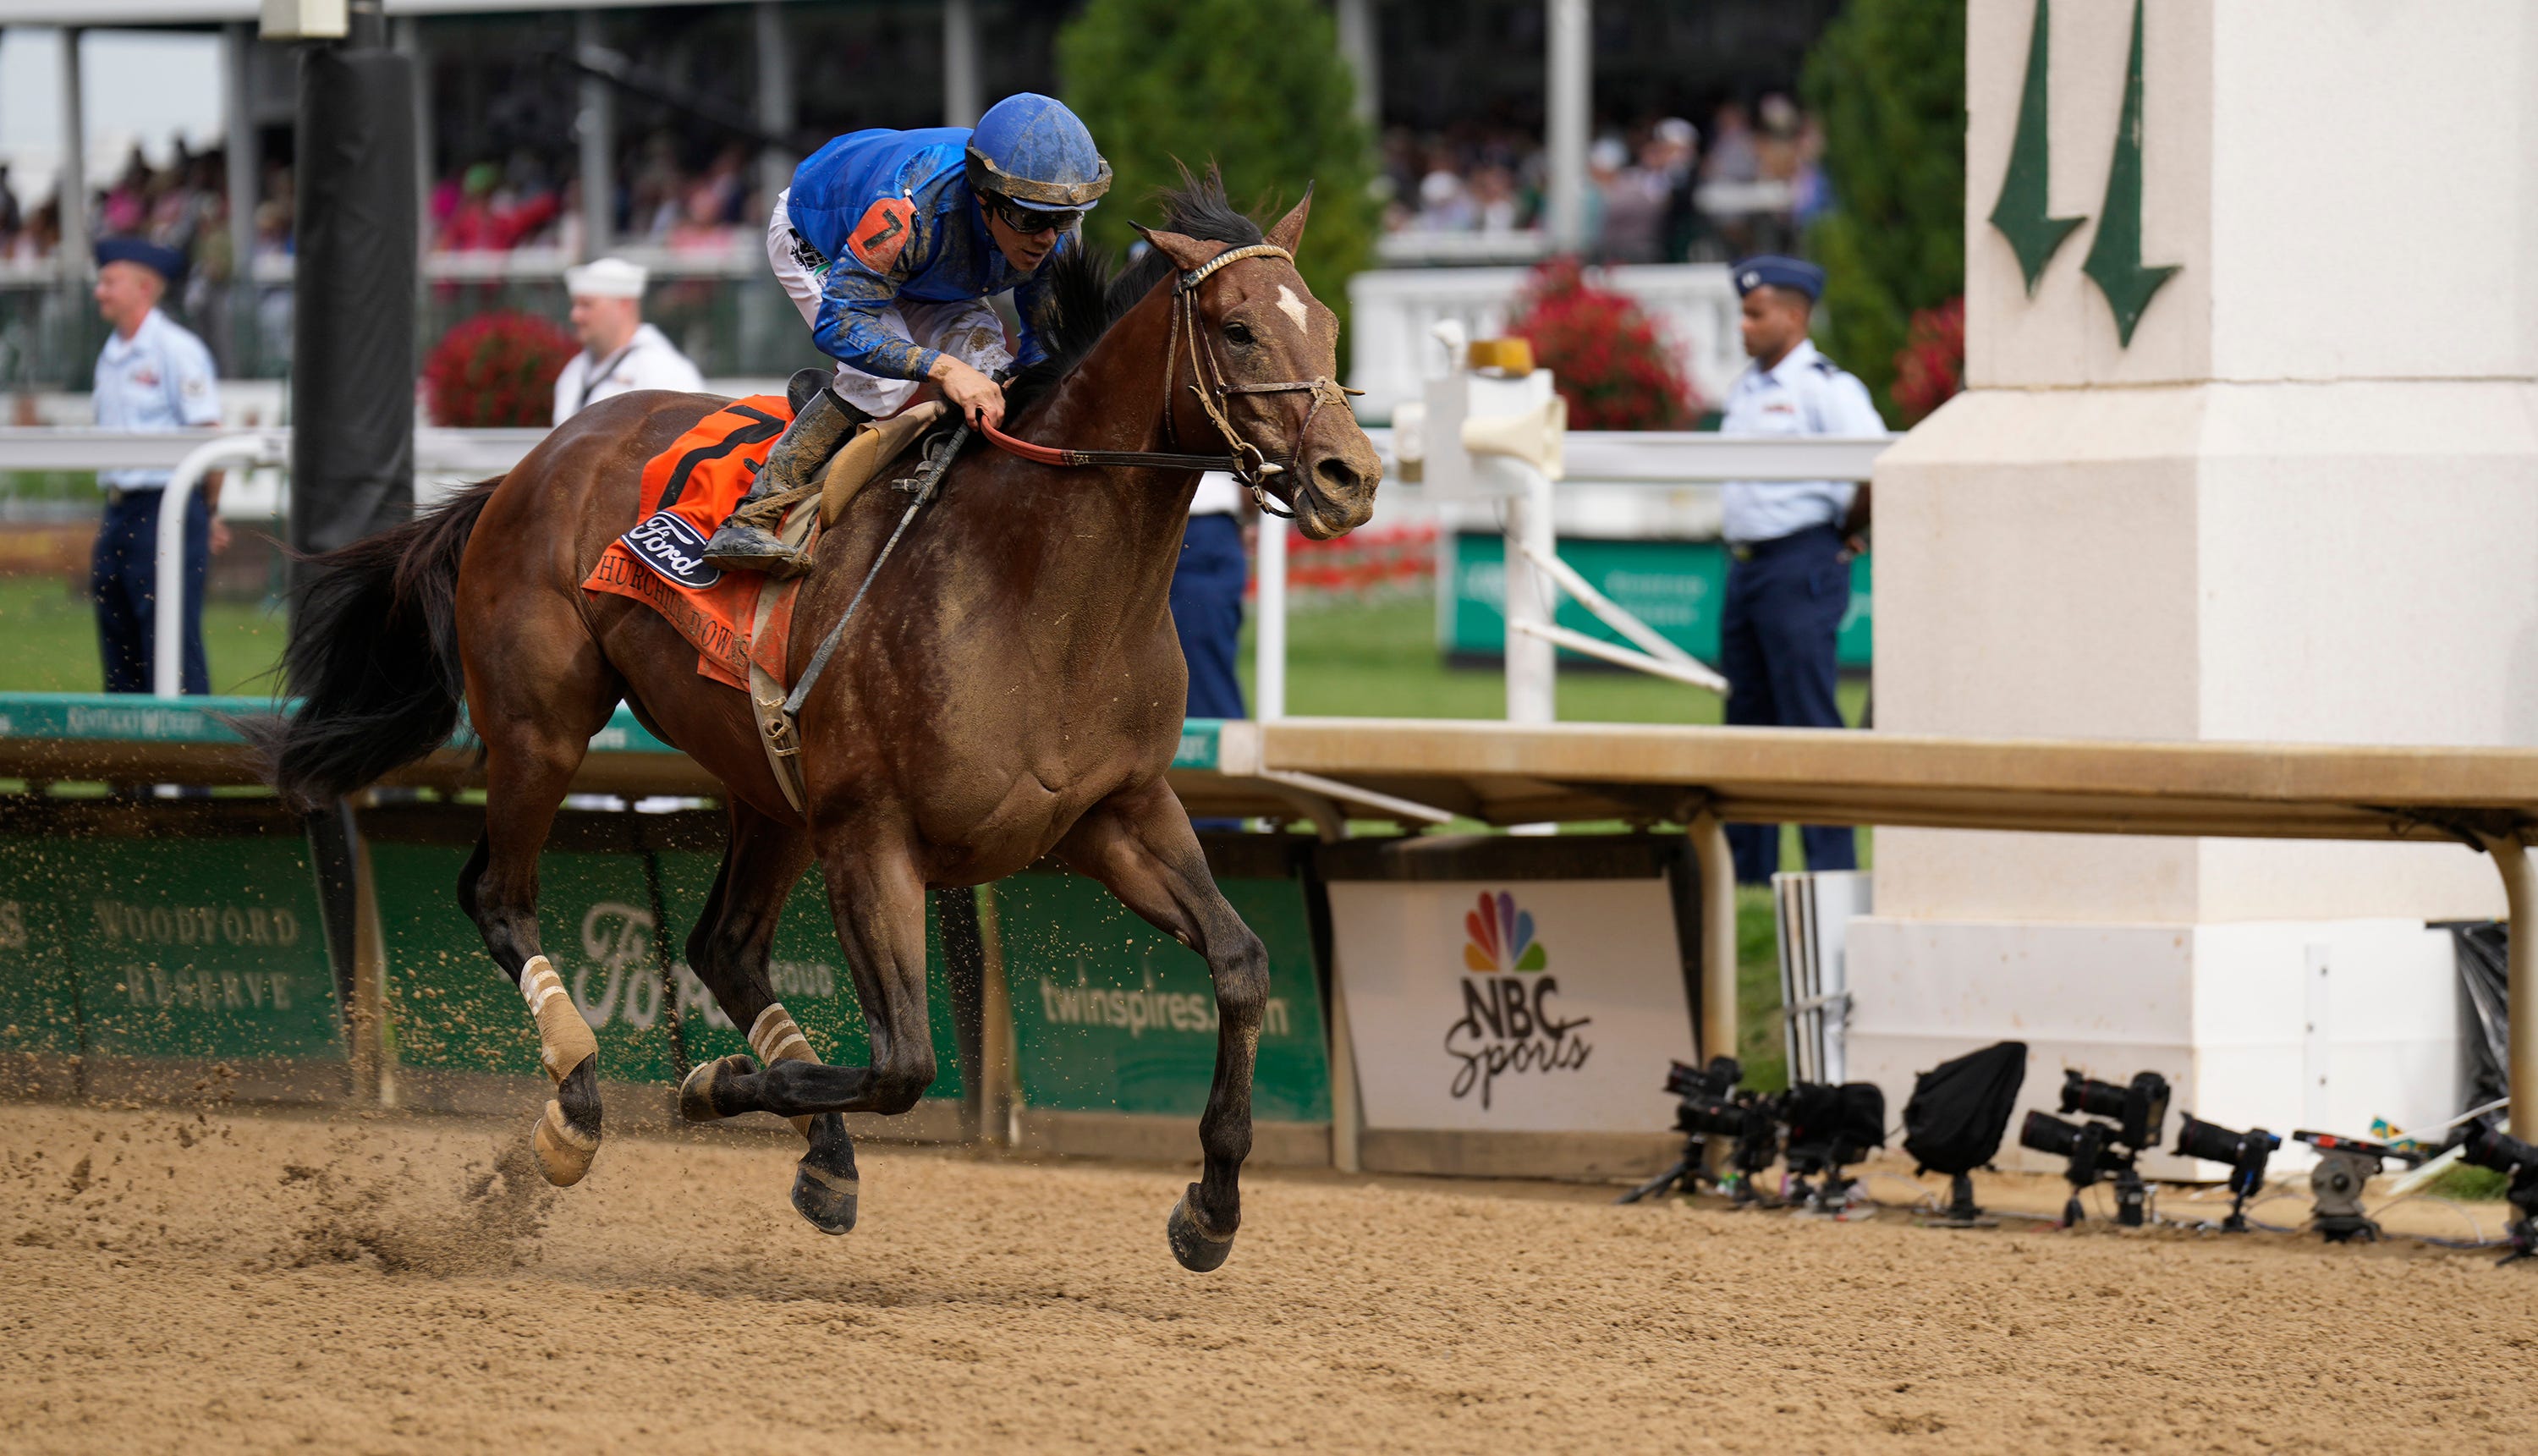 Cody Dorman, who watched namesake horse win Breeders’ Cup race, dies on